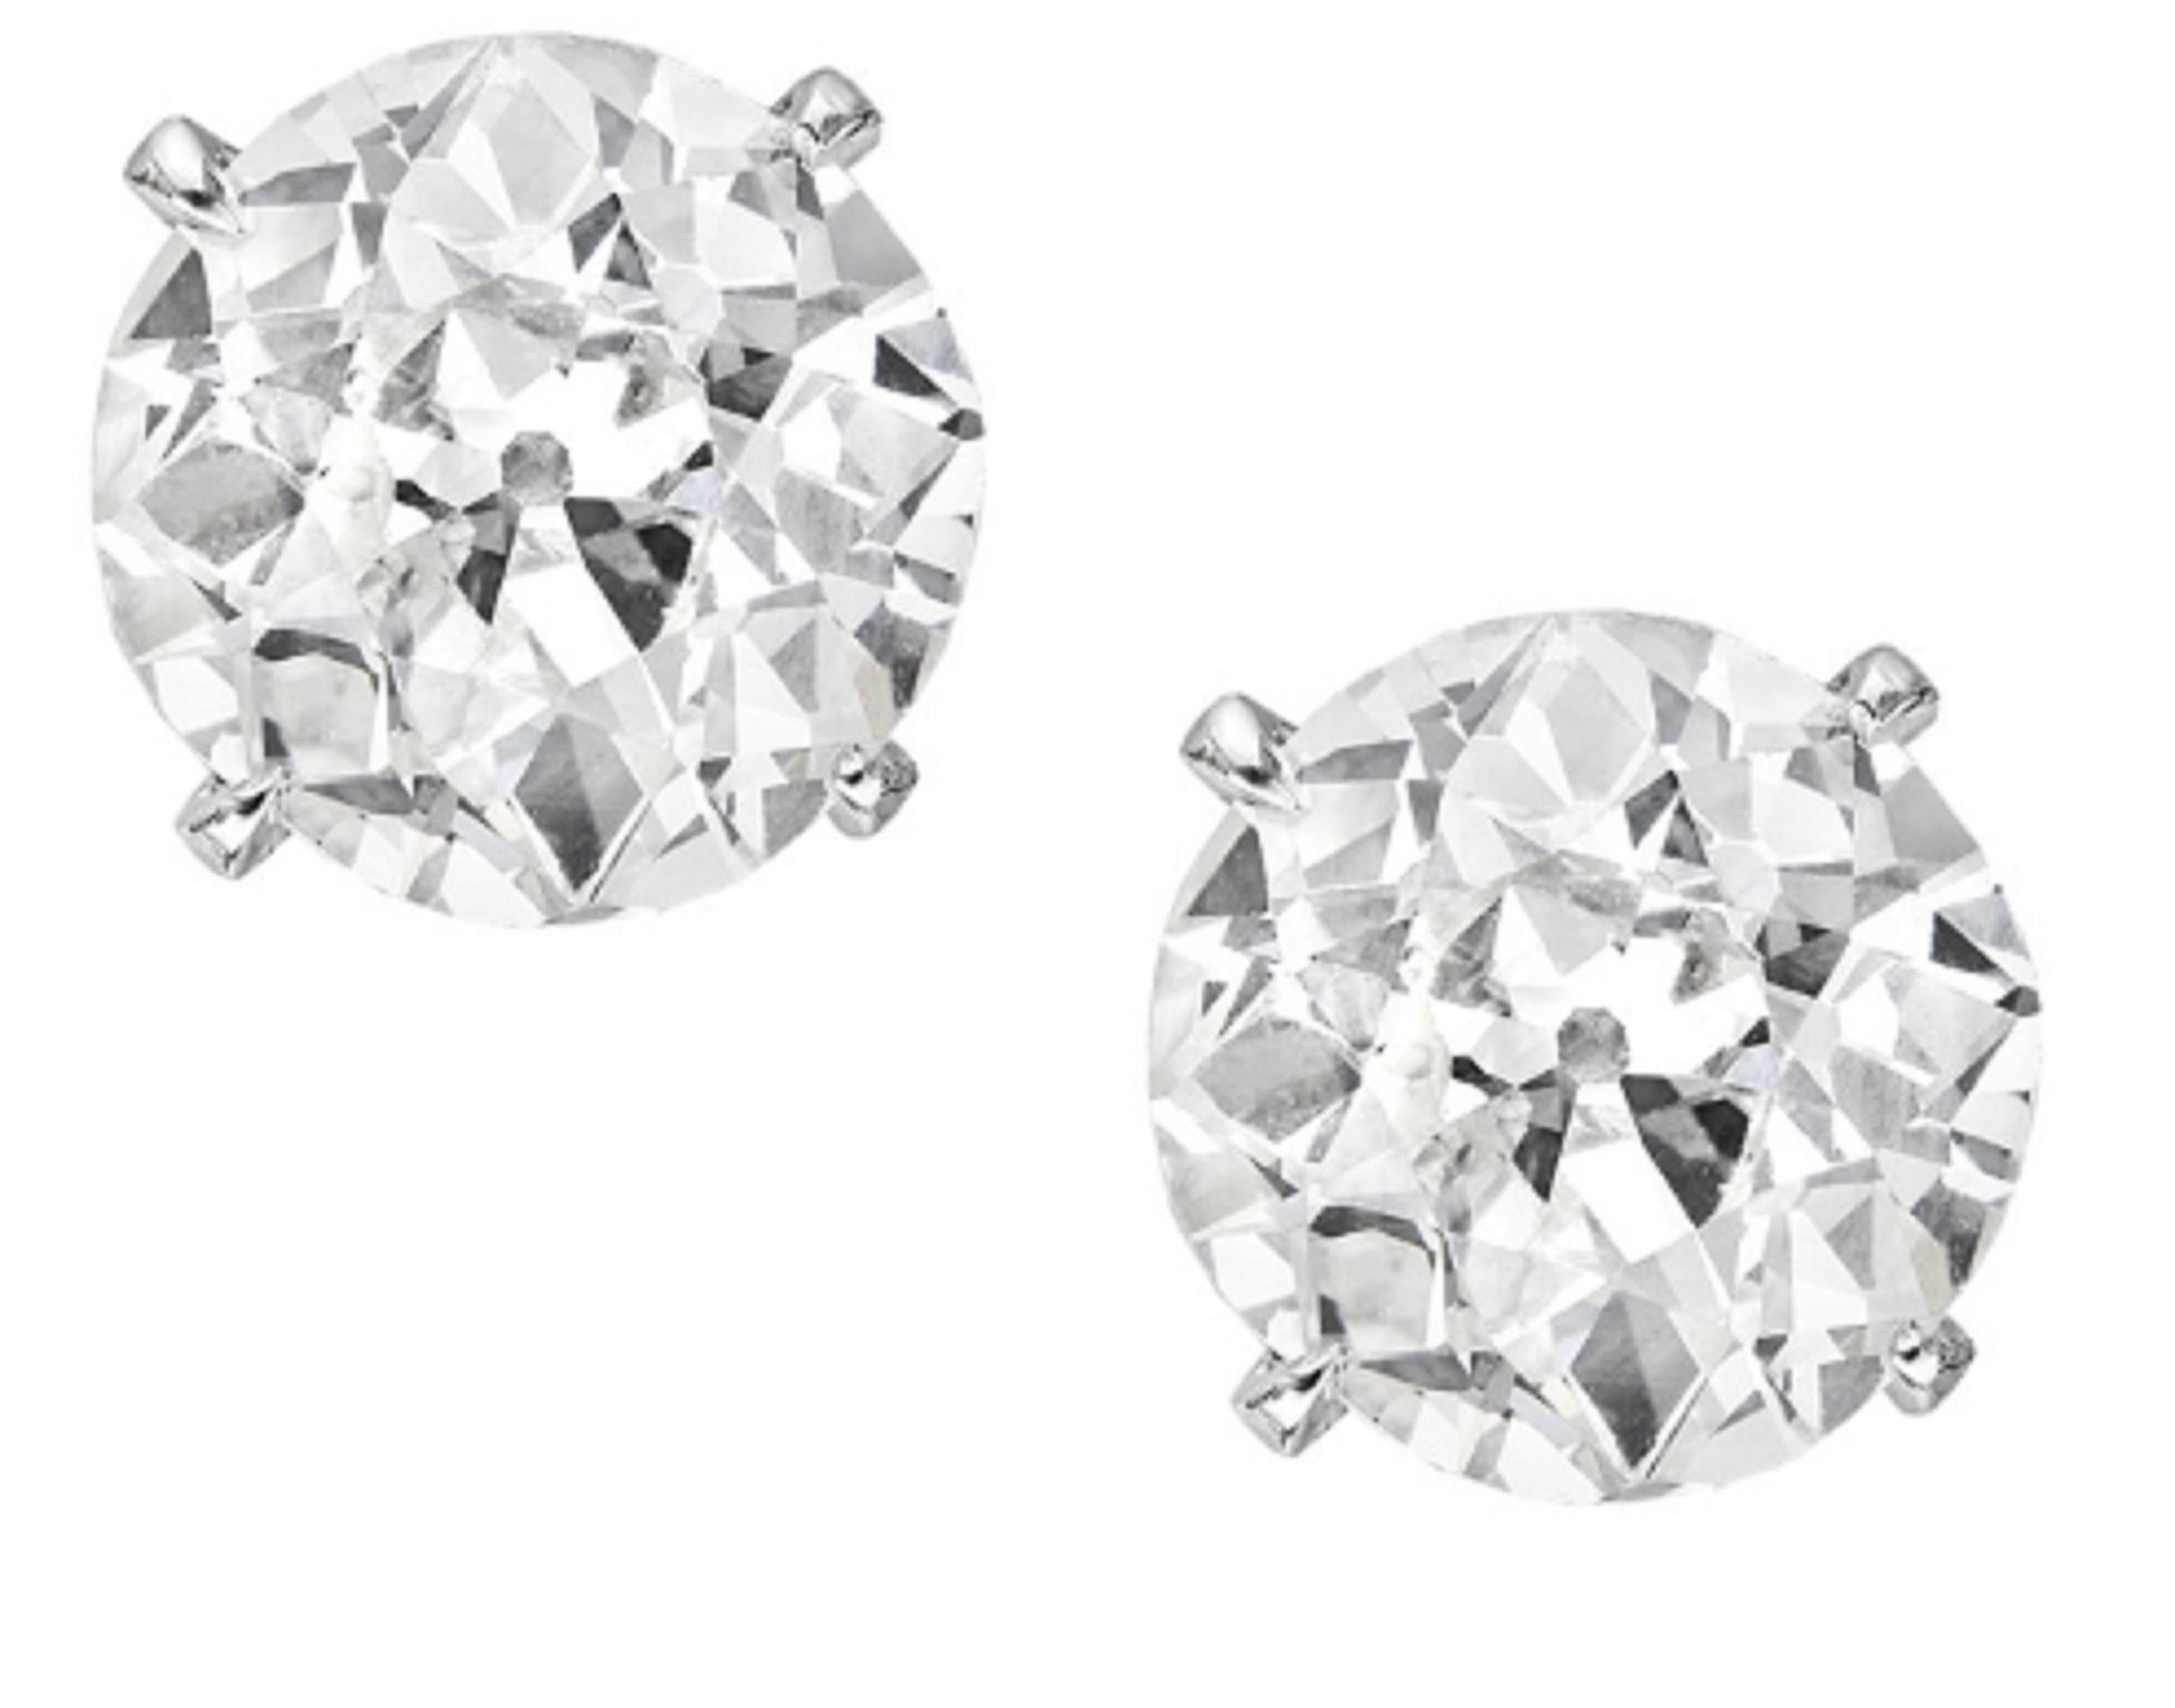 One of a Kind GIA zertifiziert 3,16 Karat Gesamtgewicht Diamant, Old European Cut Diamond Studs D/F COLOR!
100% augenrein
große Diamanten